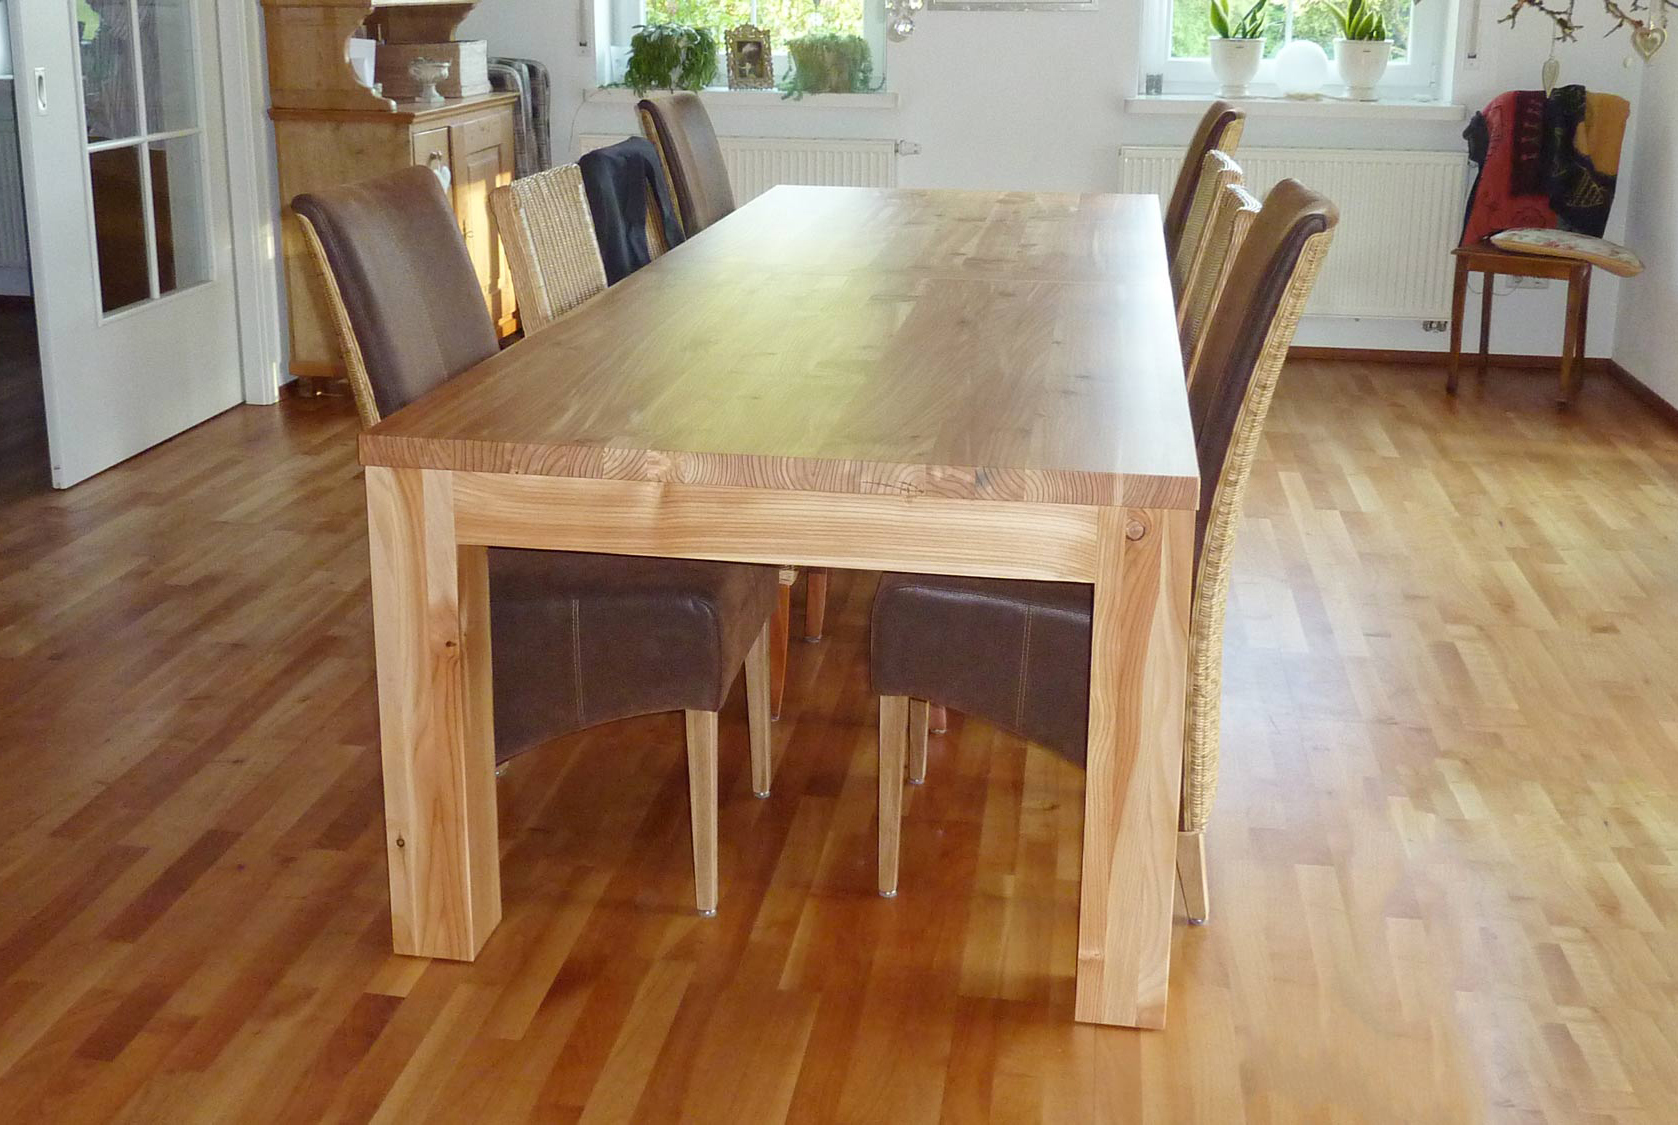 Lärche Massivholztisch 280cm lang - Tischgestell ganz aussen